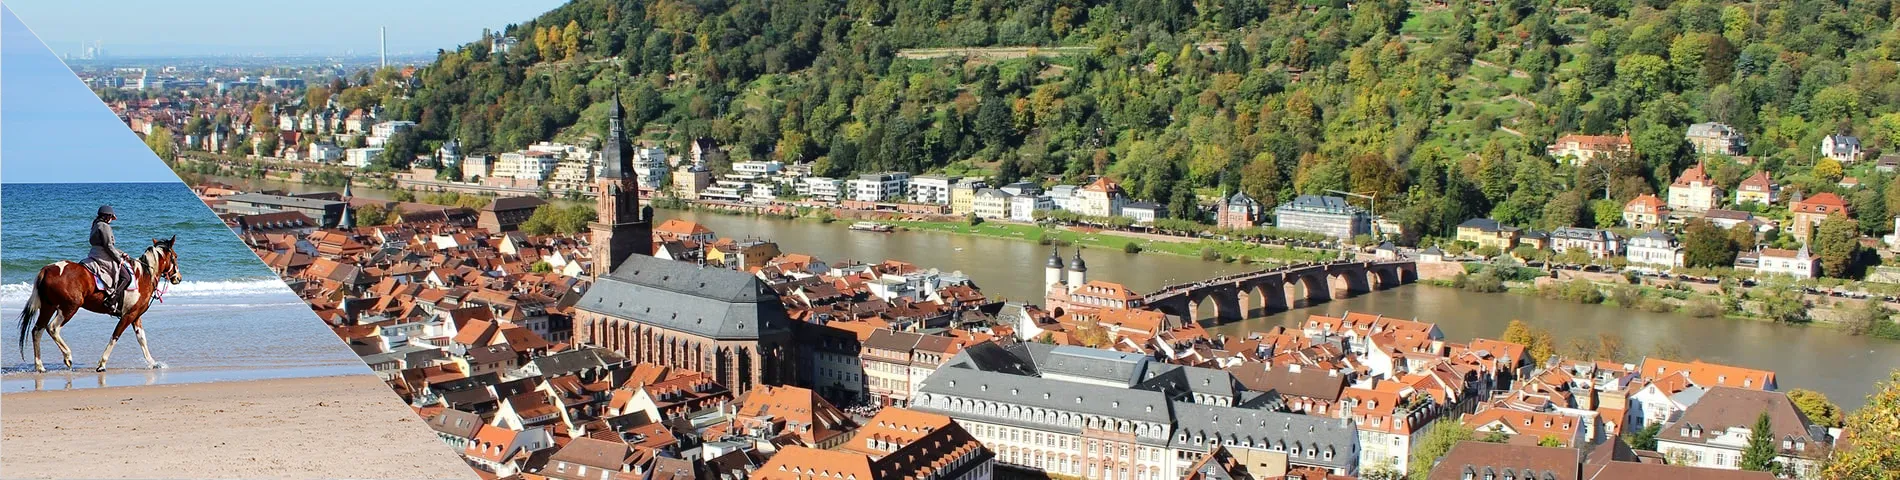 Heidelberg - Nemčina a jazda na koni